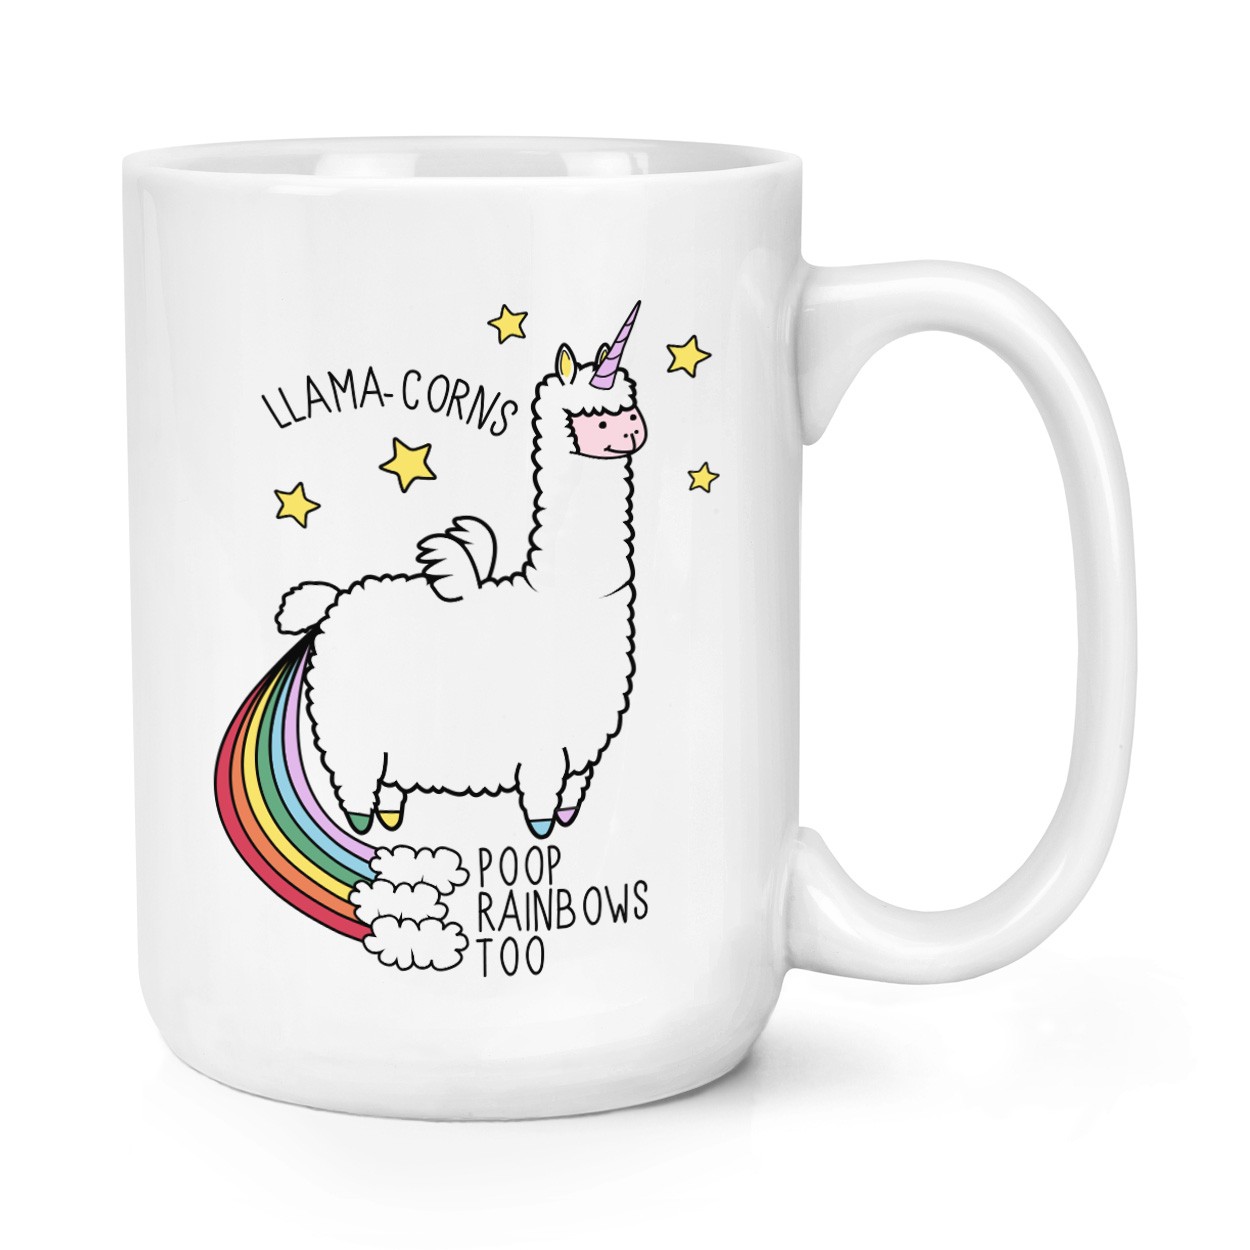 Llama-corns Poop Rainbows Too 15oz Large Mug Cup - Unicorn Llama Big Large